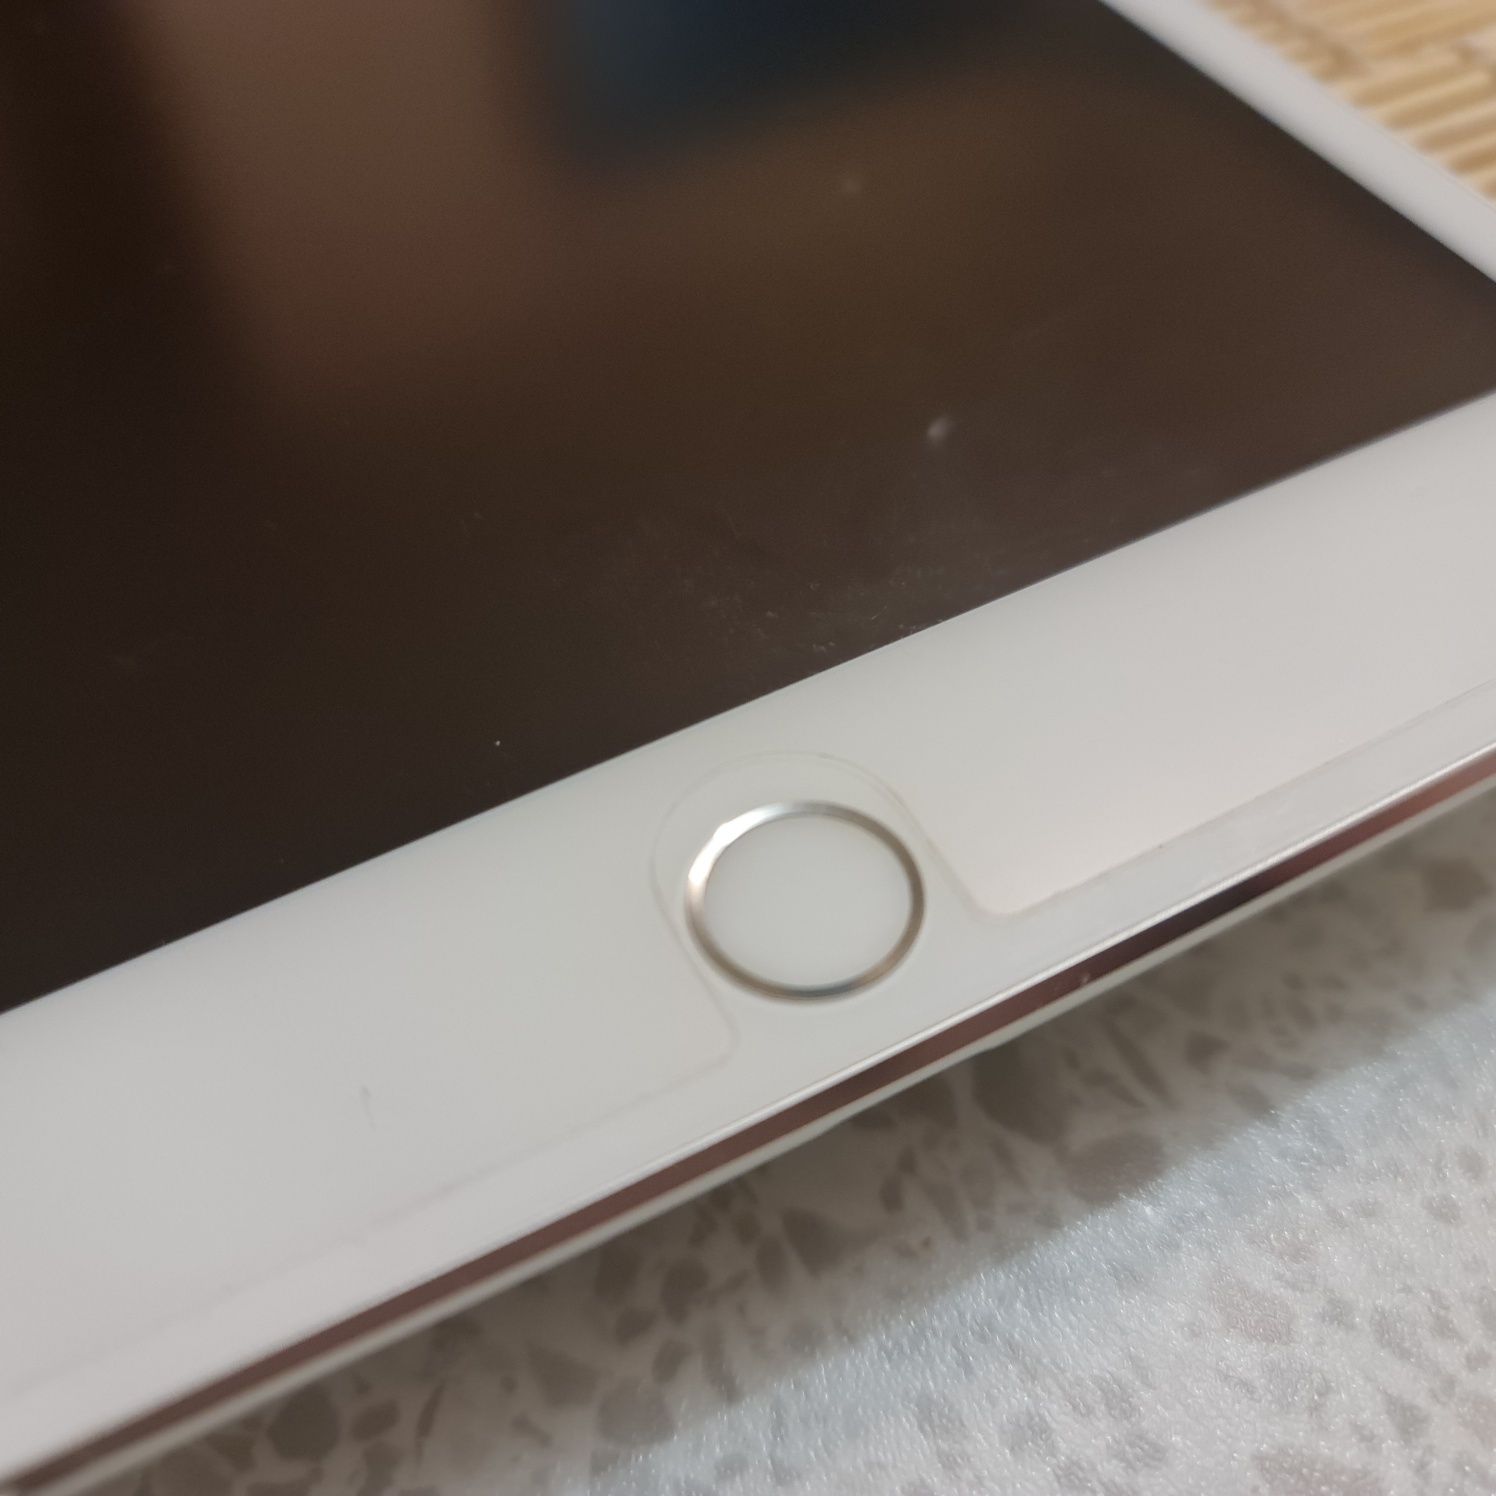 Apple iPad mini 4 (A1550) Wi-Fi + Cellular 64Gb Silver